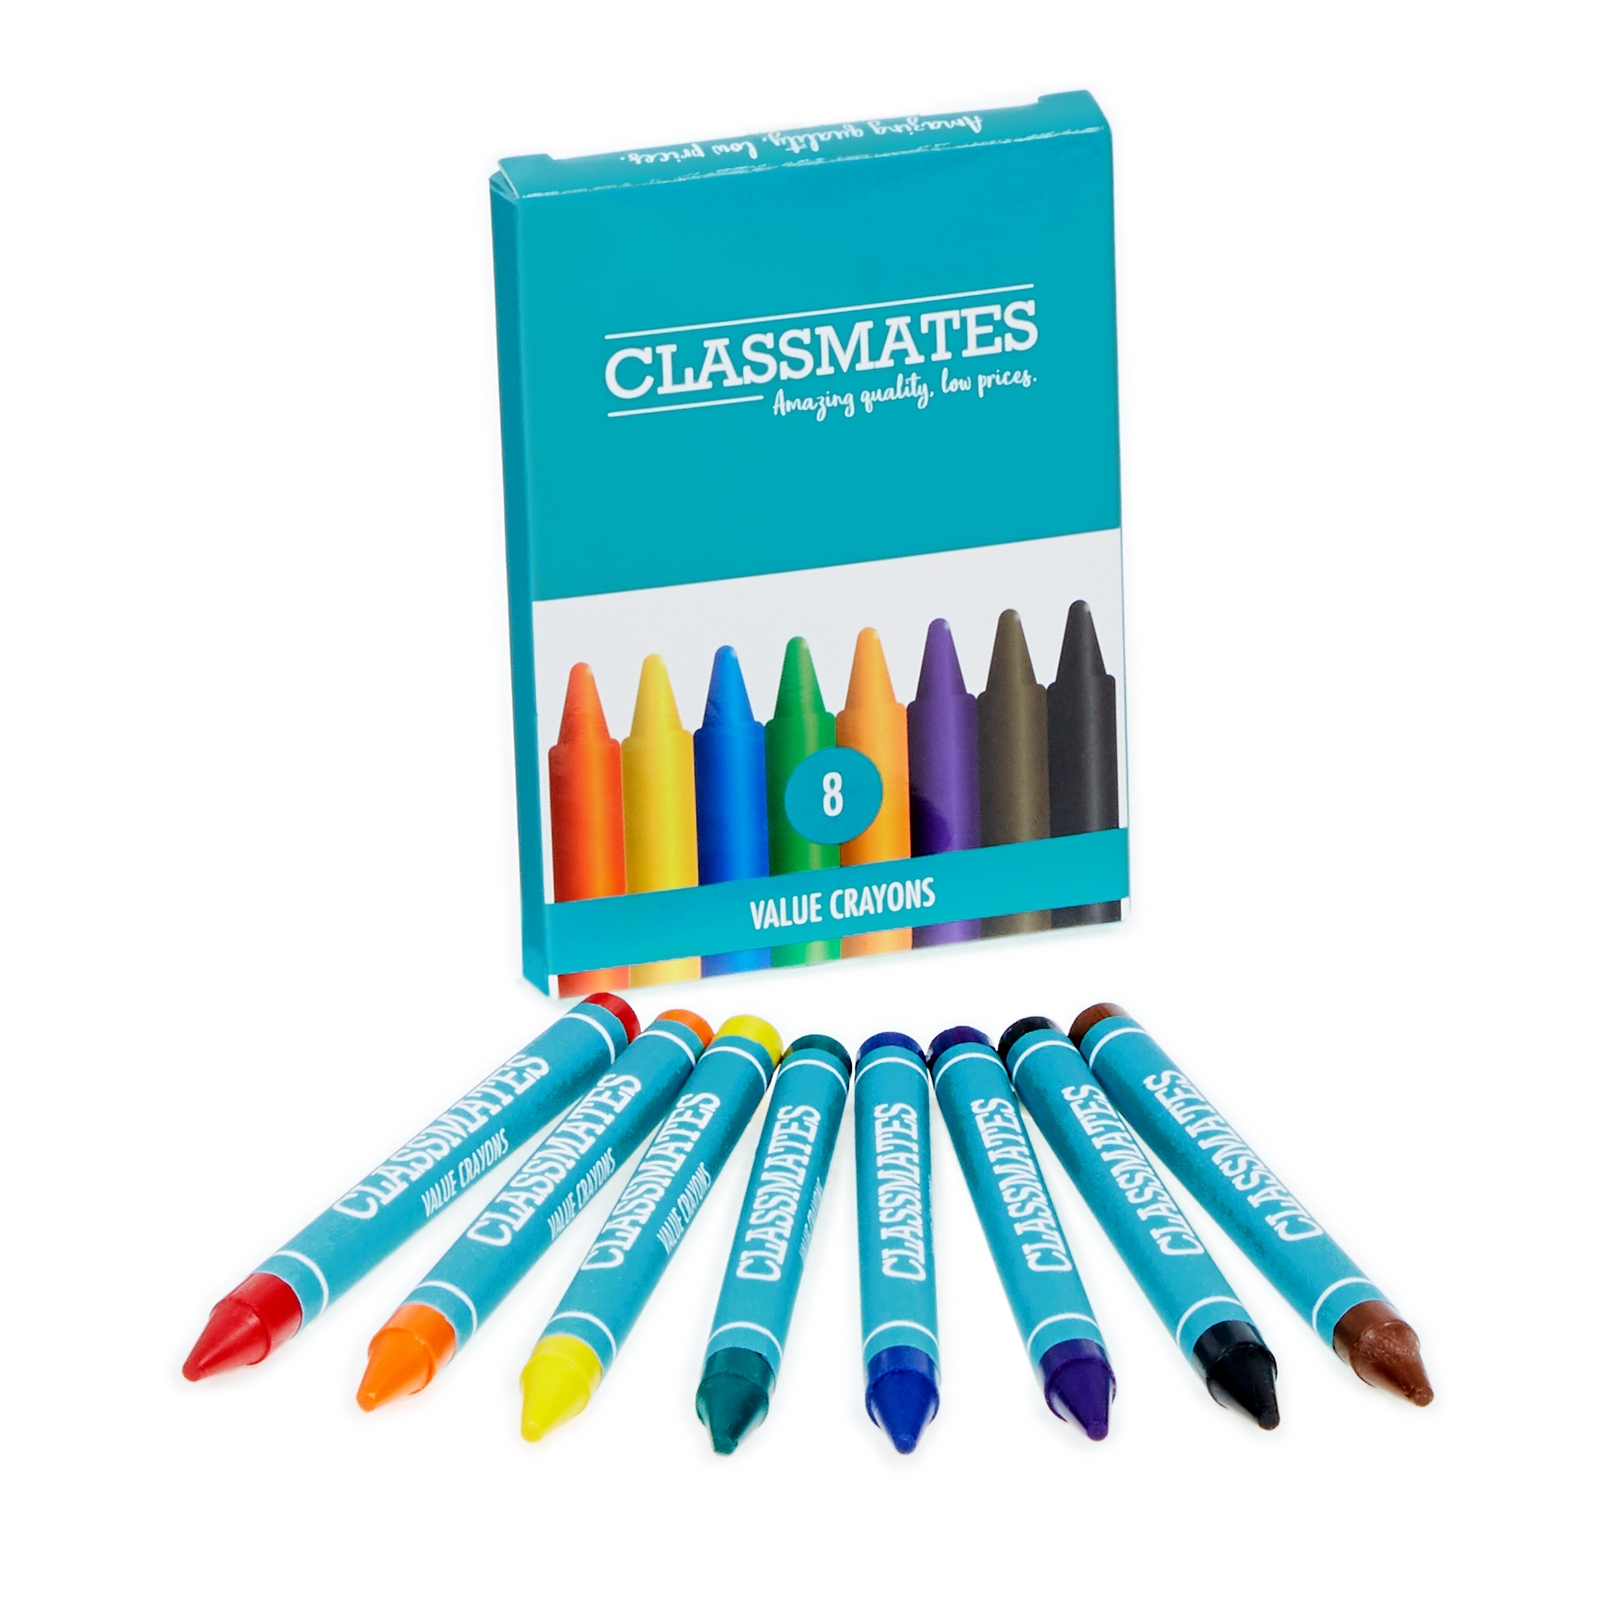 Classmates Value Crayons - Pack 8